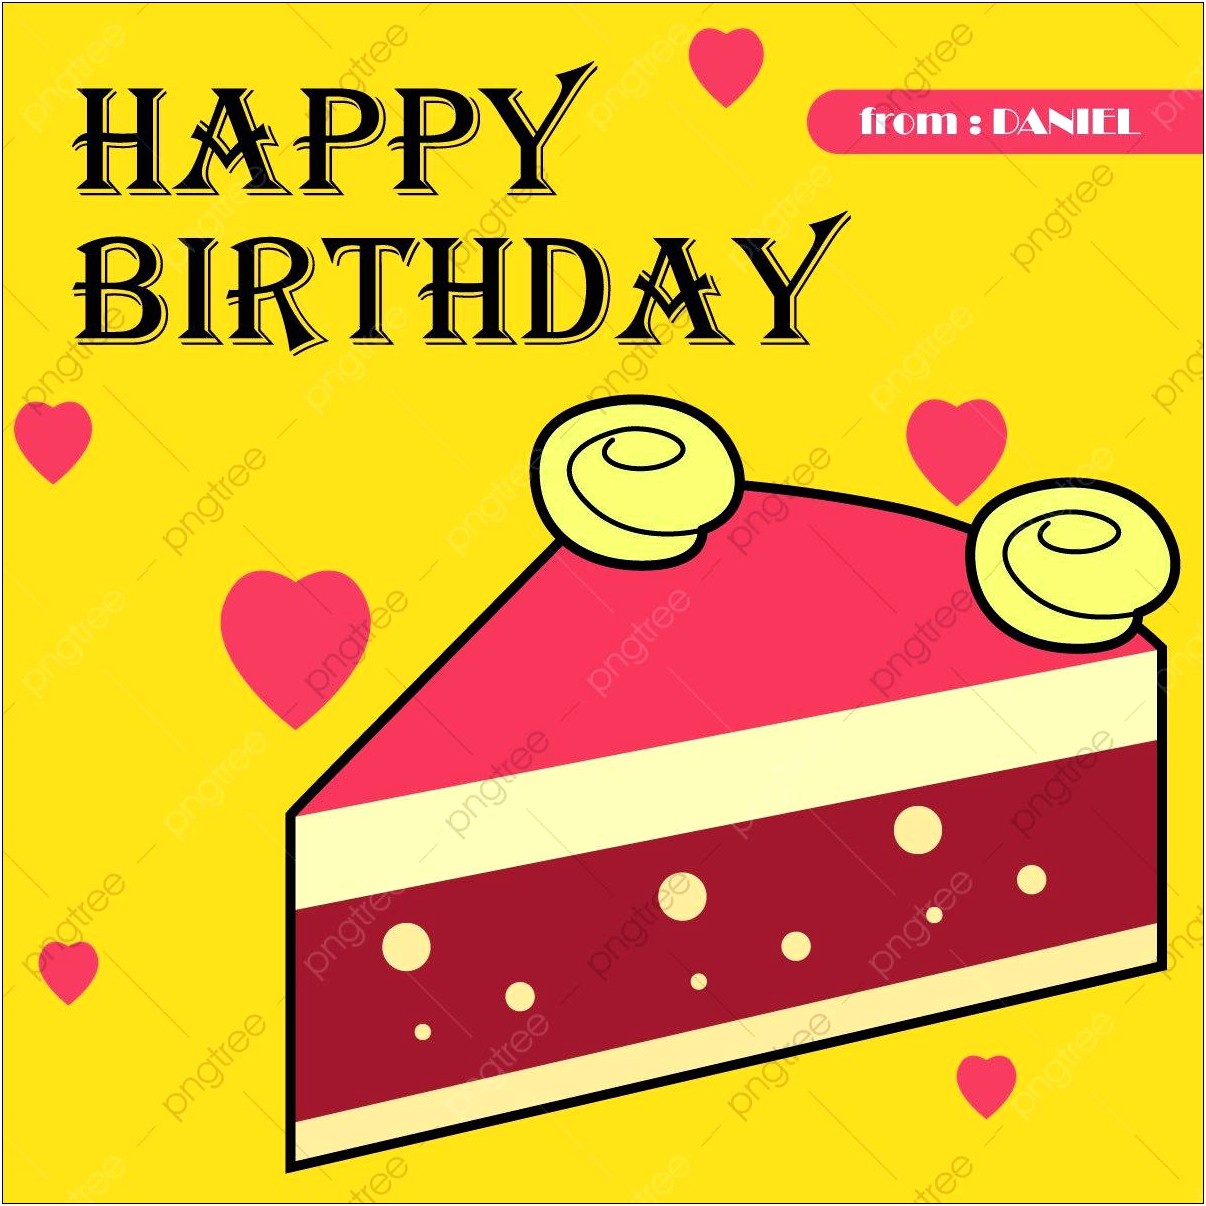 Free Happy Birthday Greeting Card Template